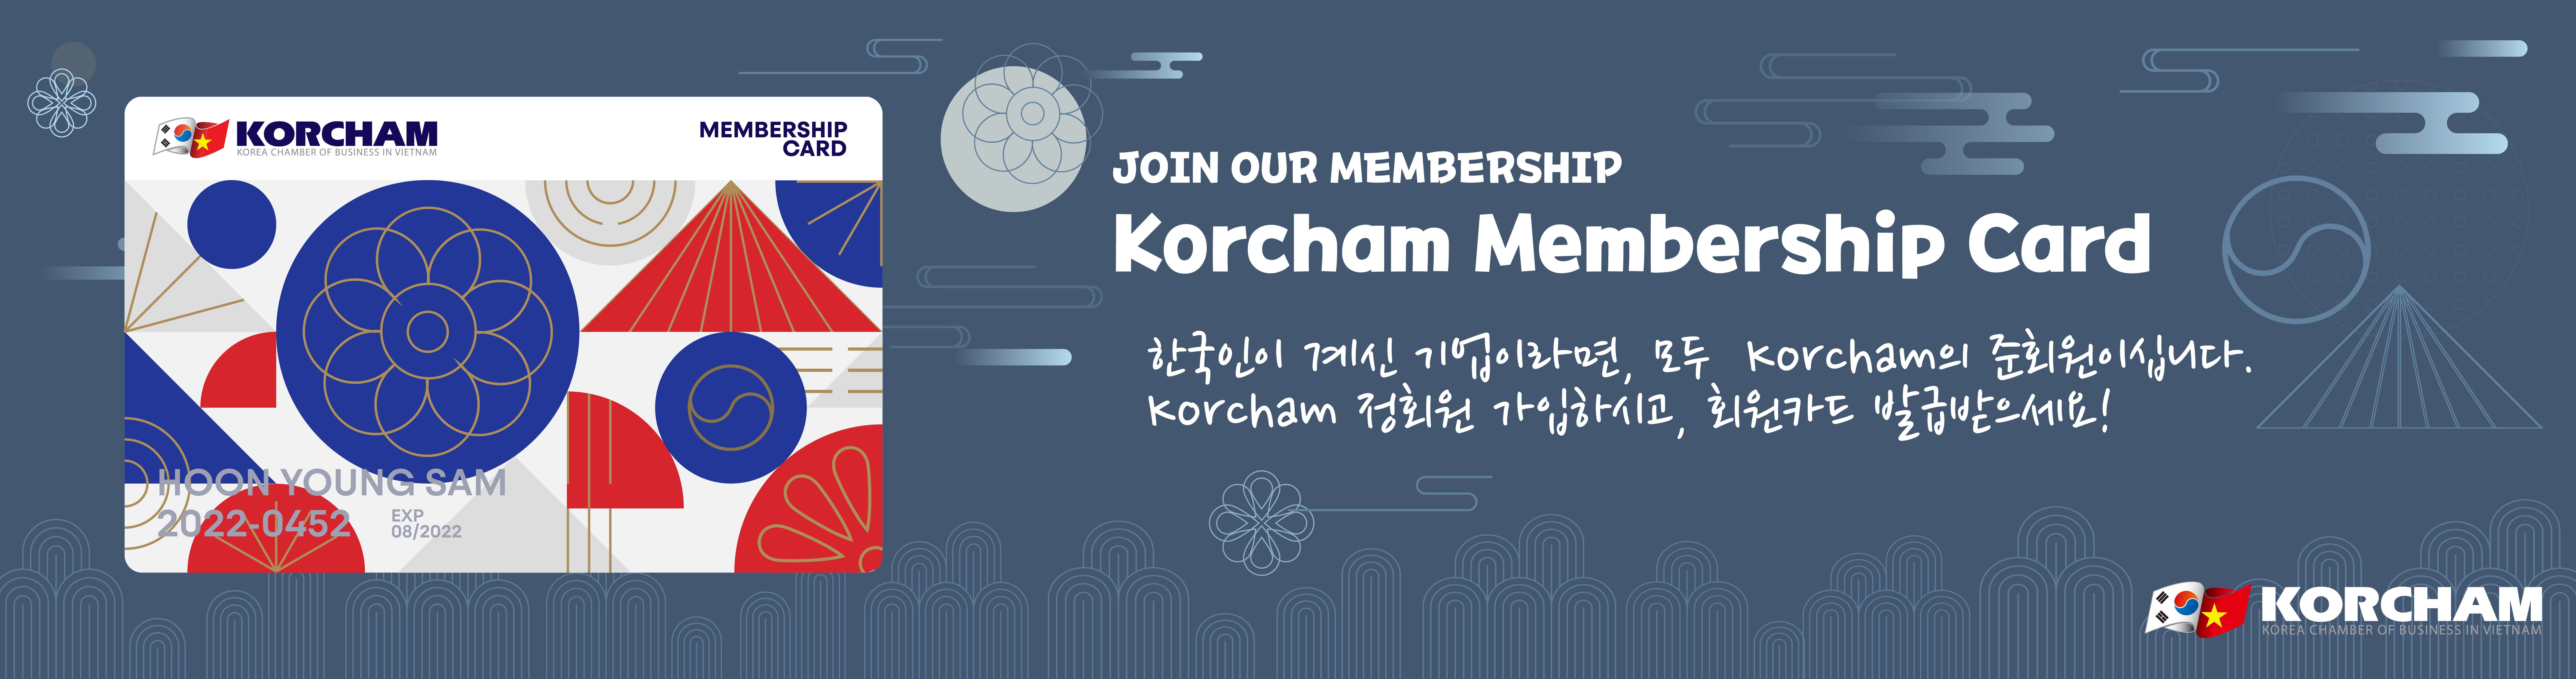 Korcham Membership Card